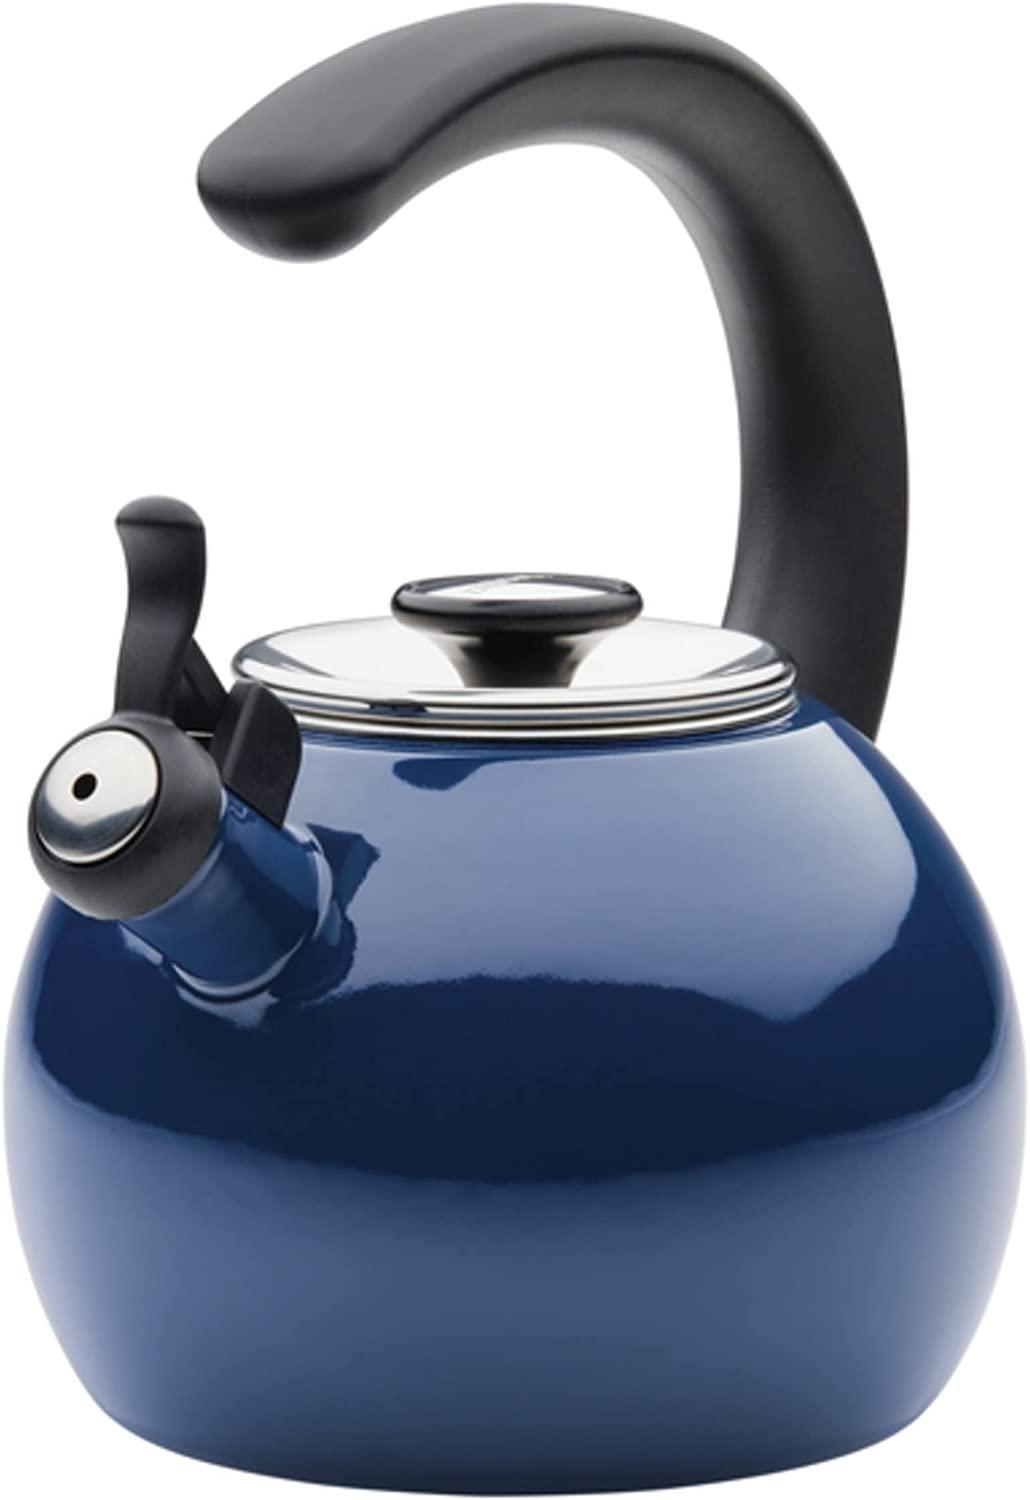 https://www.dontwasteyourmoney.com/wp-content/uploads/2019/08/circulon-1-5-quart-sunrise-tea-kettle.jpg